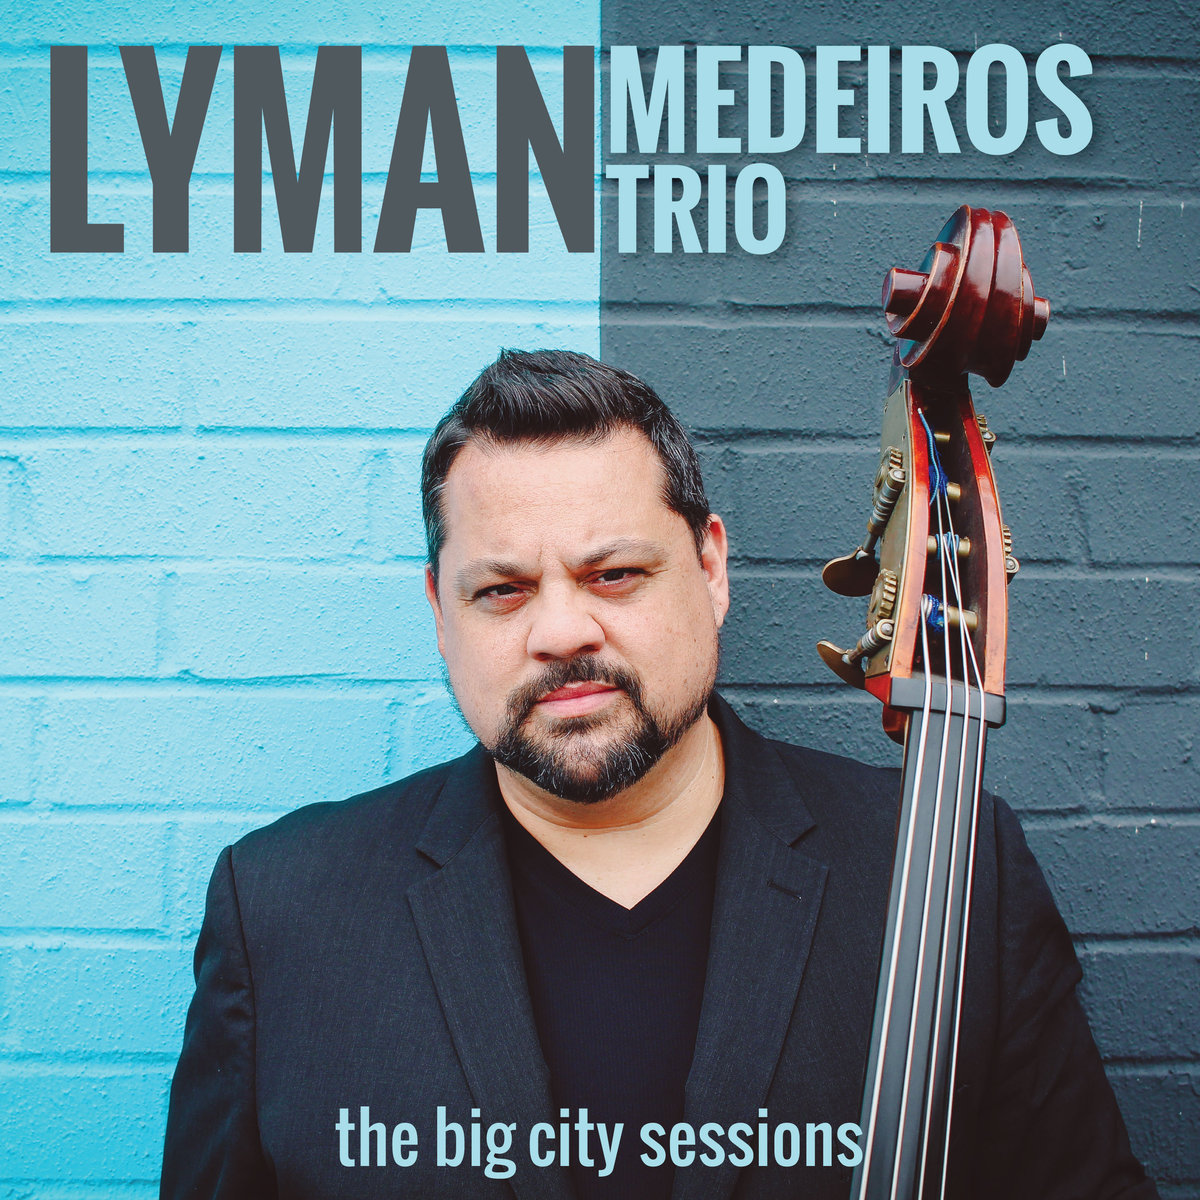 Dave Damiani w/ Lyman Medeiros Trio - The Grove 